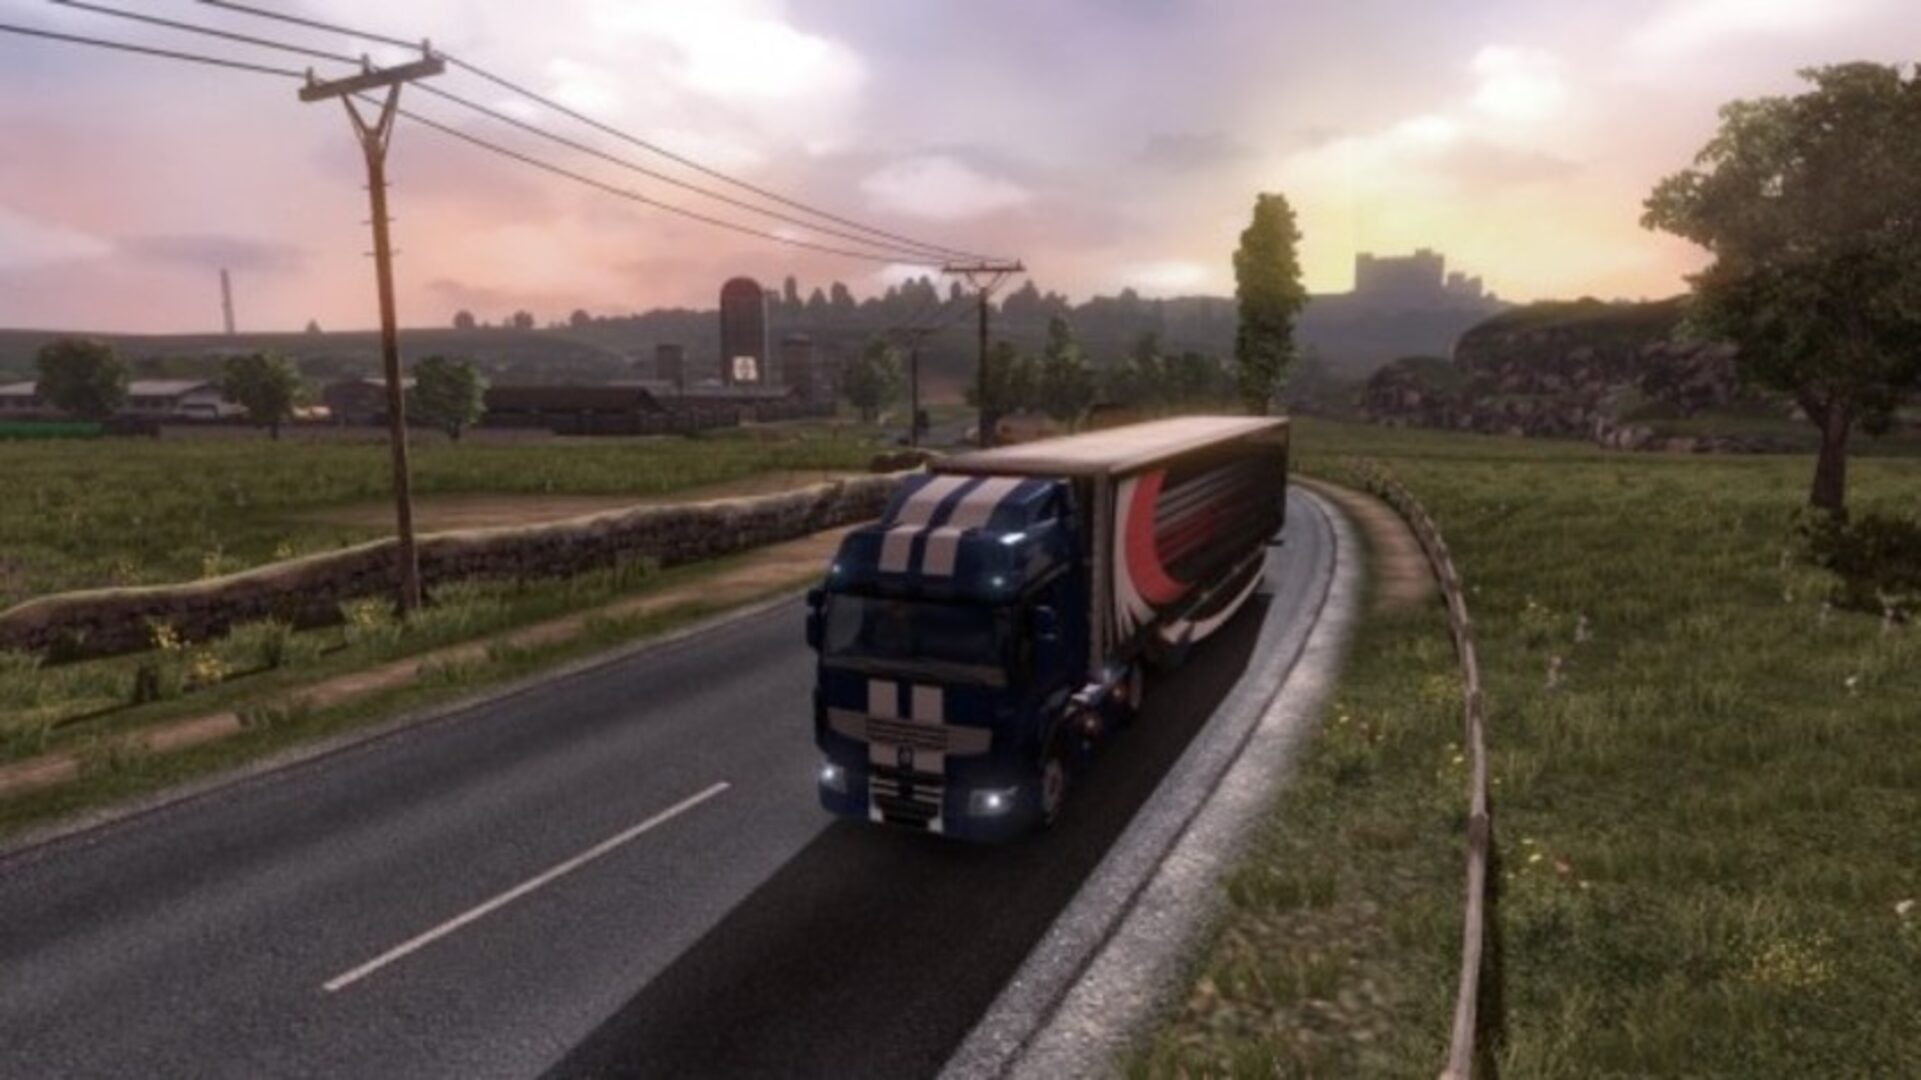 Buy Euro Truck Simulator 2 Gold Edition Steam Key